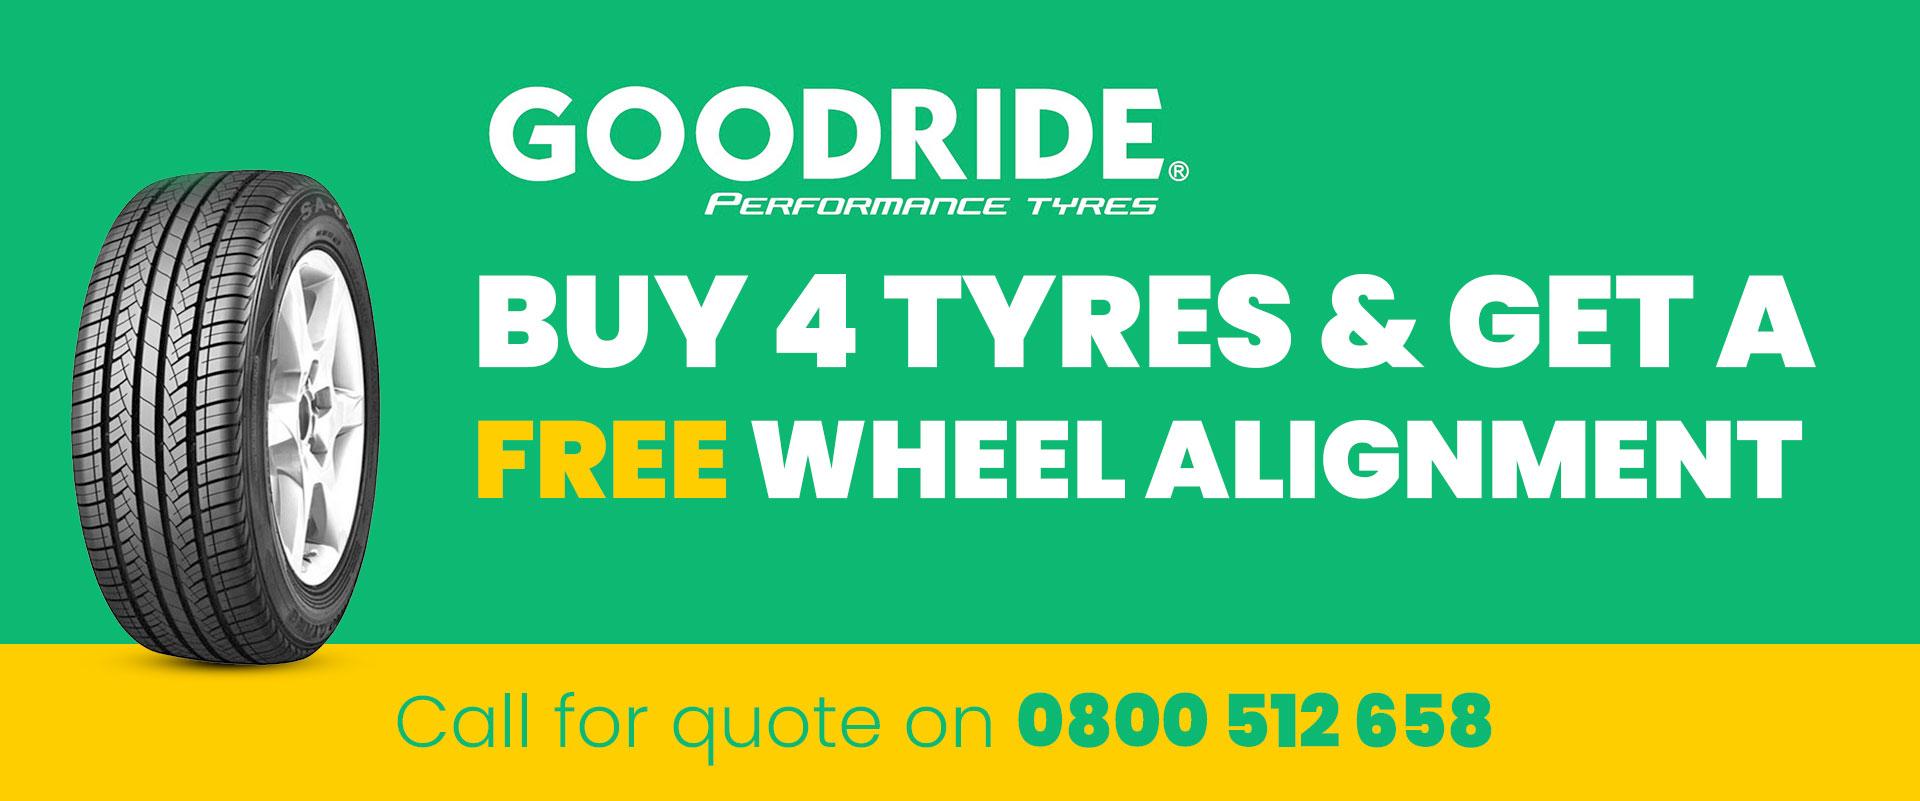 good ride tyres discount